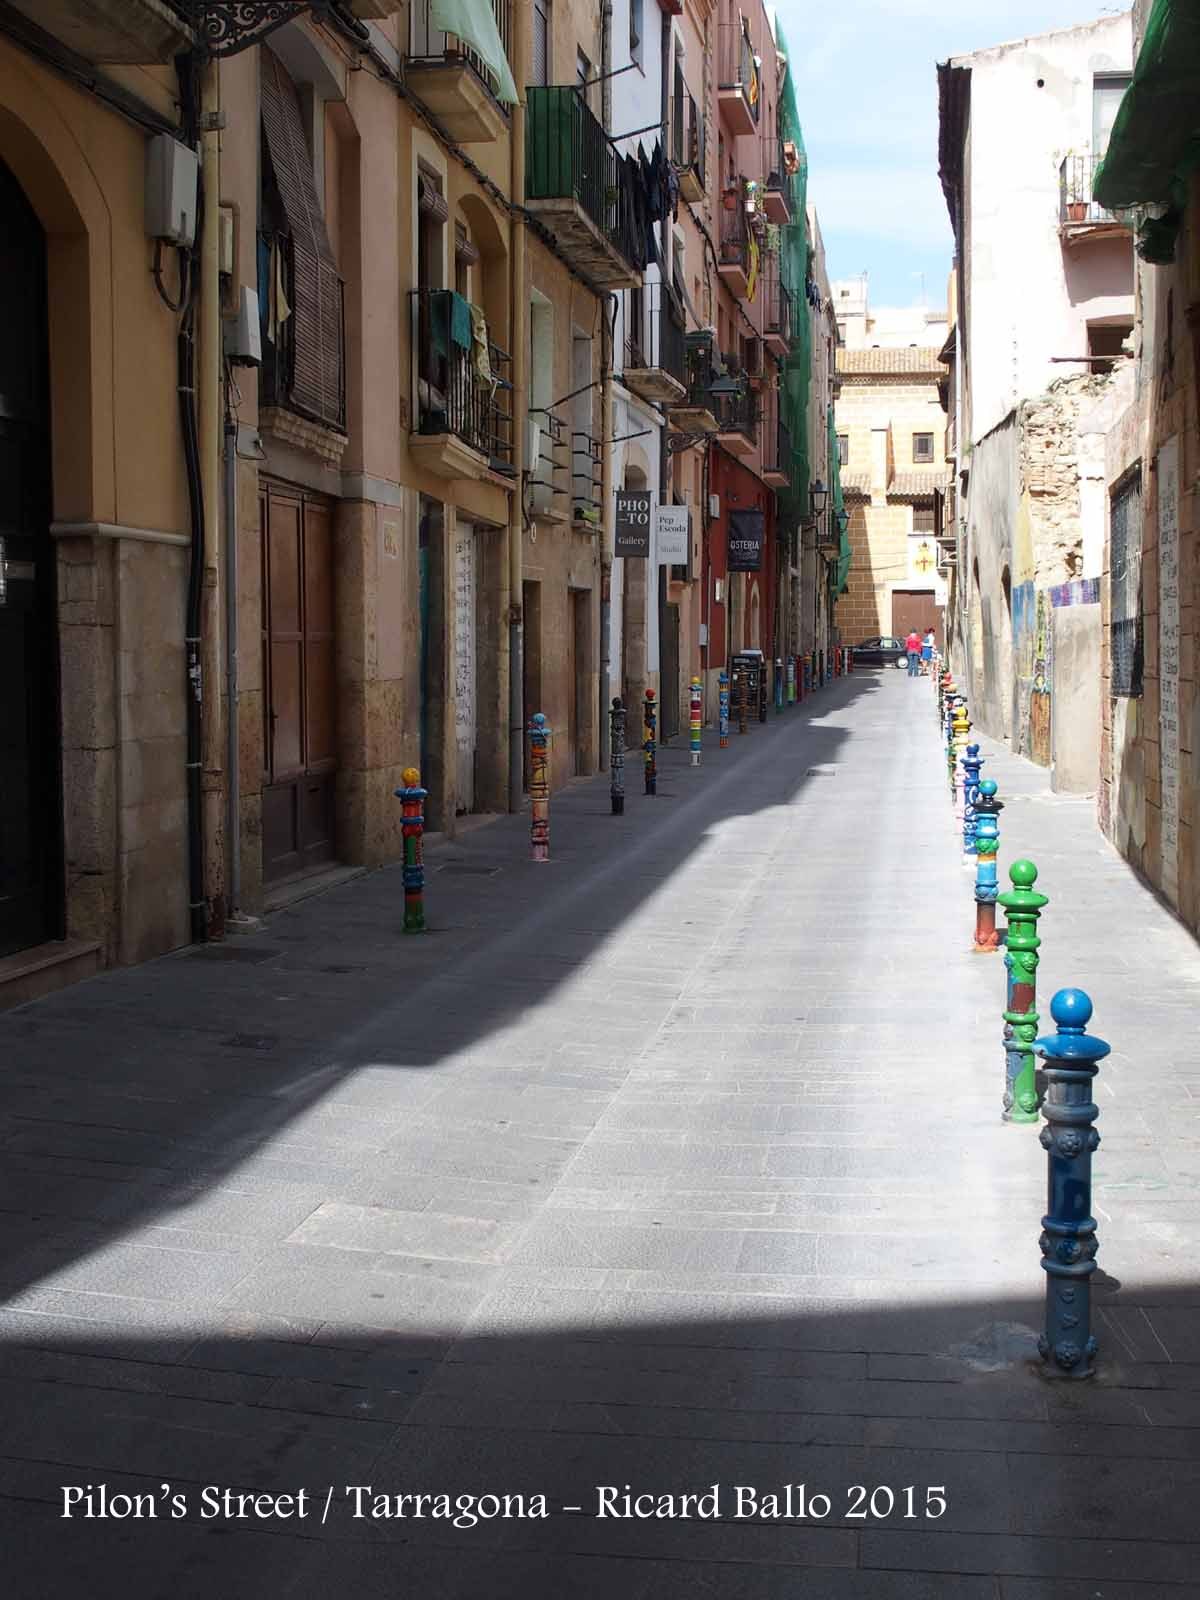 Pilon's Street / Tarragona